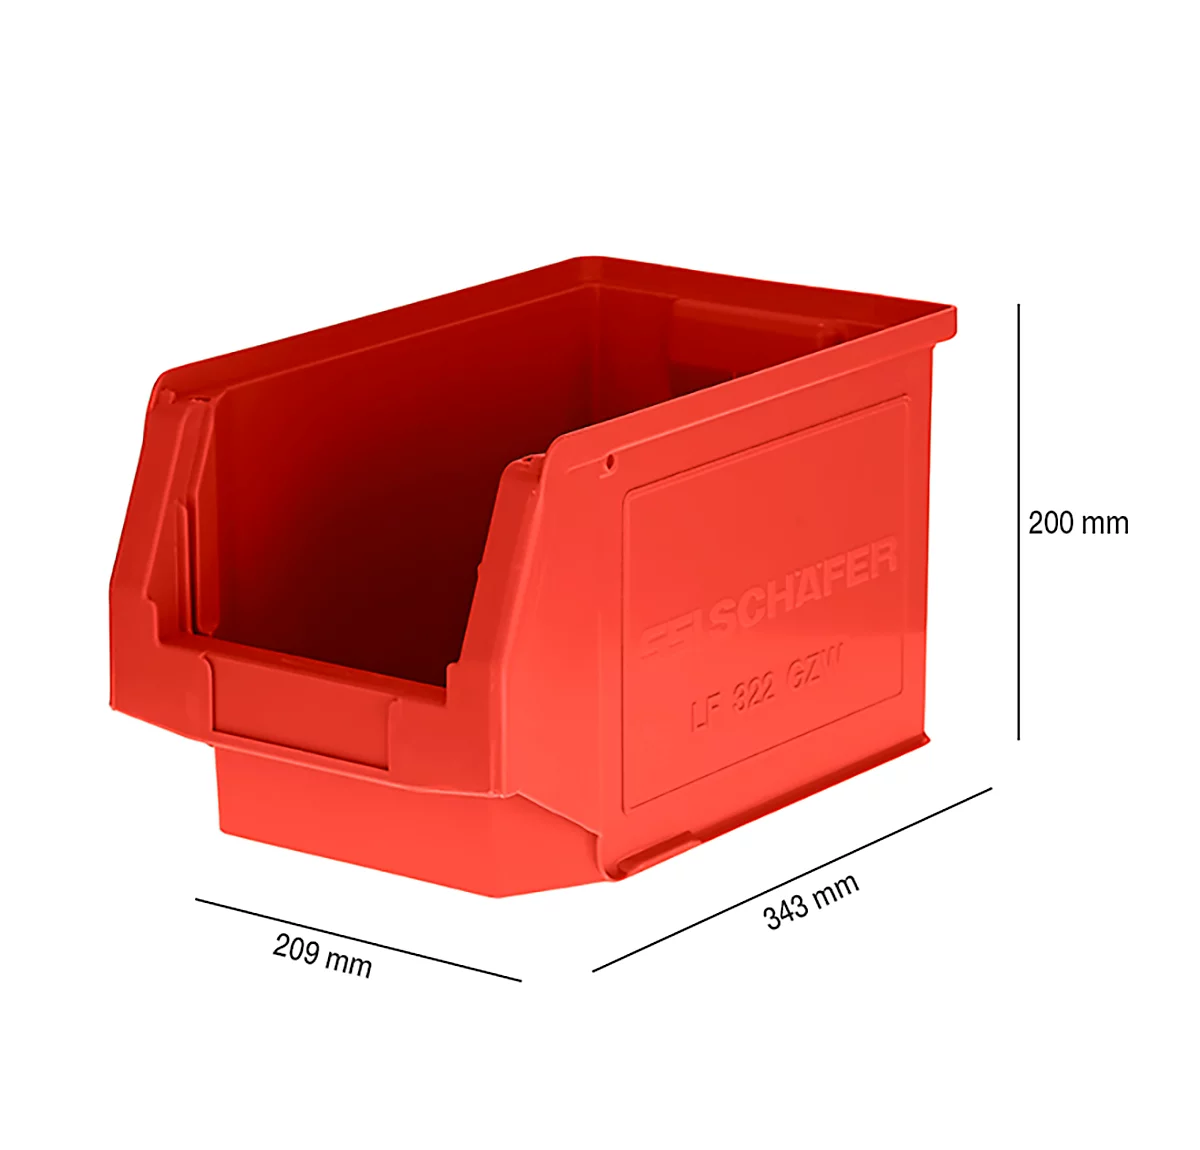 Sichtlagerkasten LF 322, Kunststoff, 10,4 l, rot